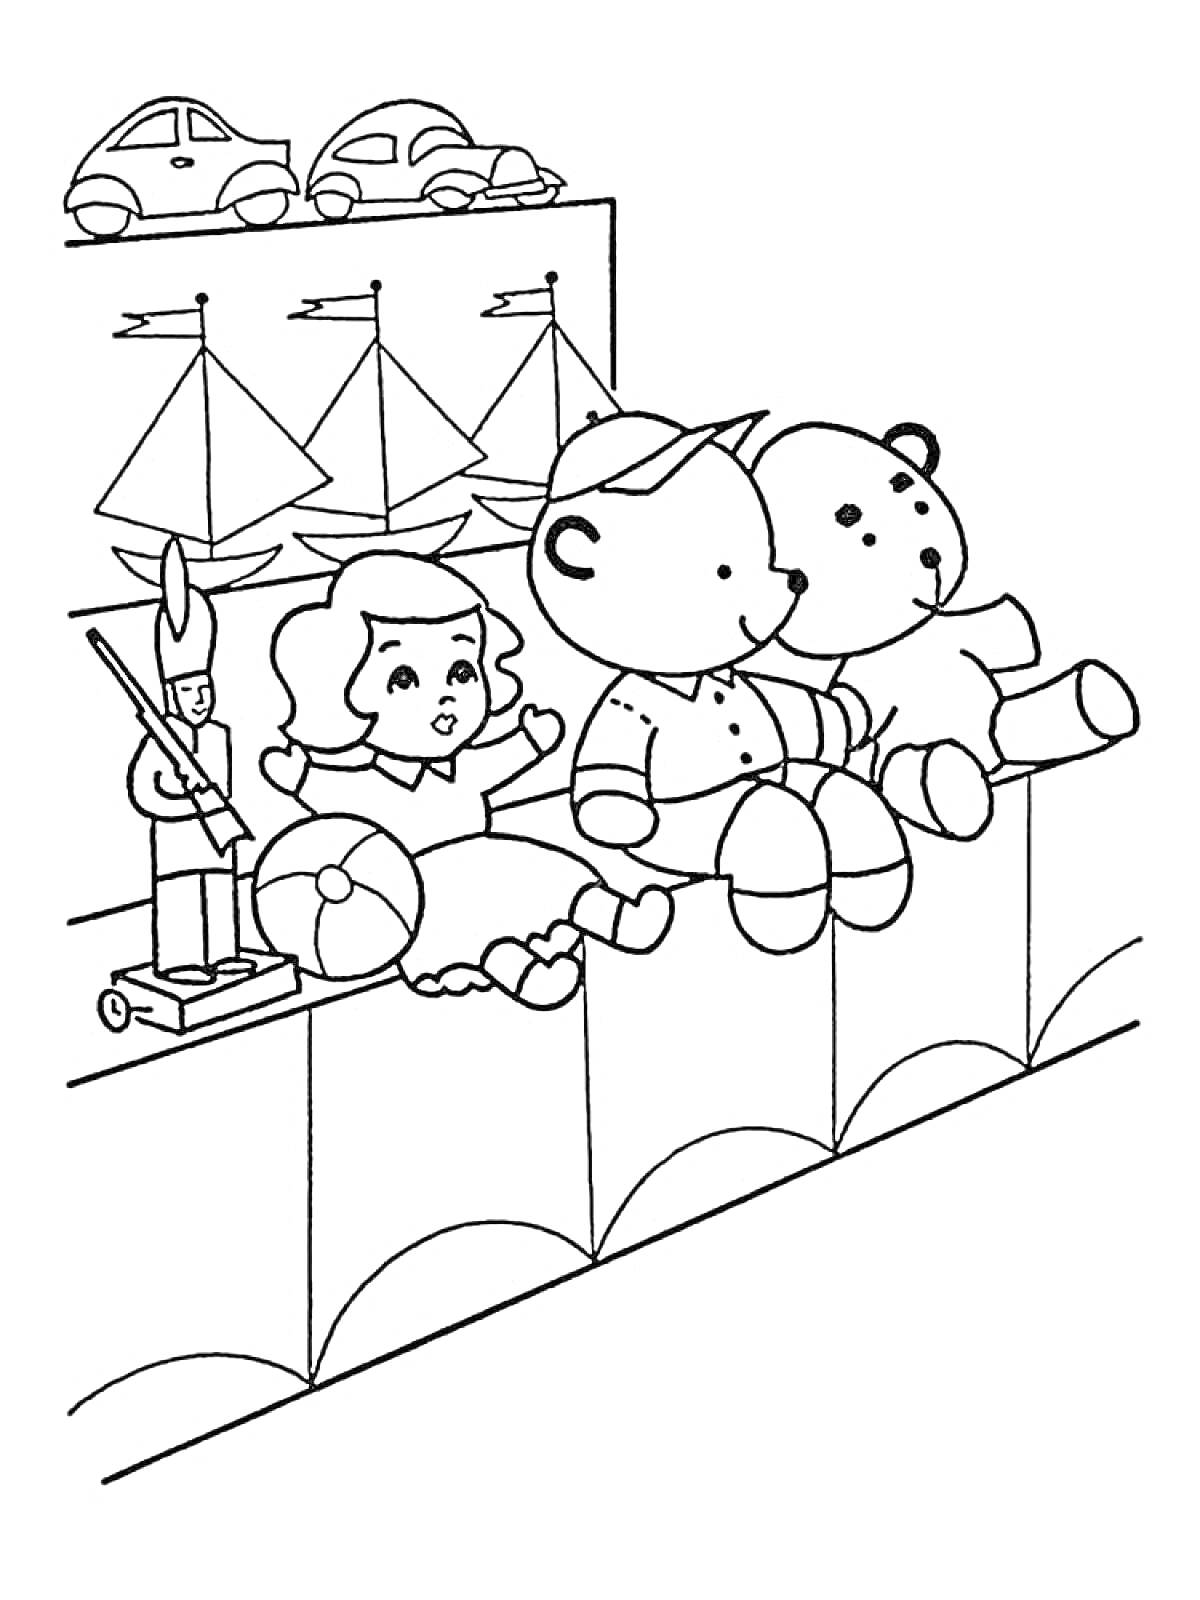 На раскраске изображено: Магазин игрушек, Машинки, Парусники, Кукла, Игрушки, Полки